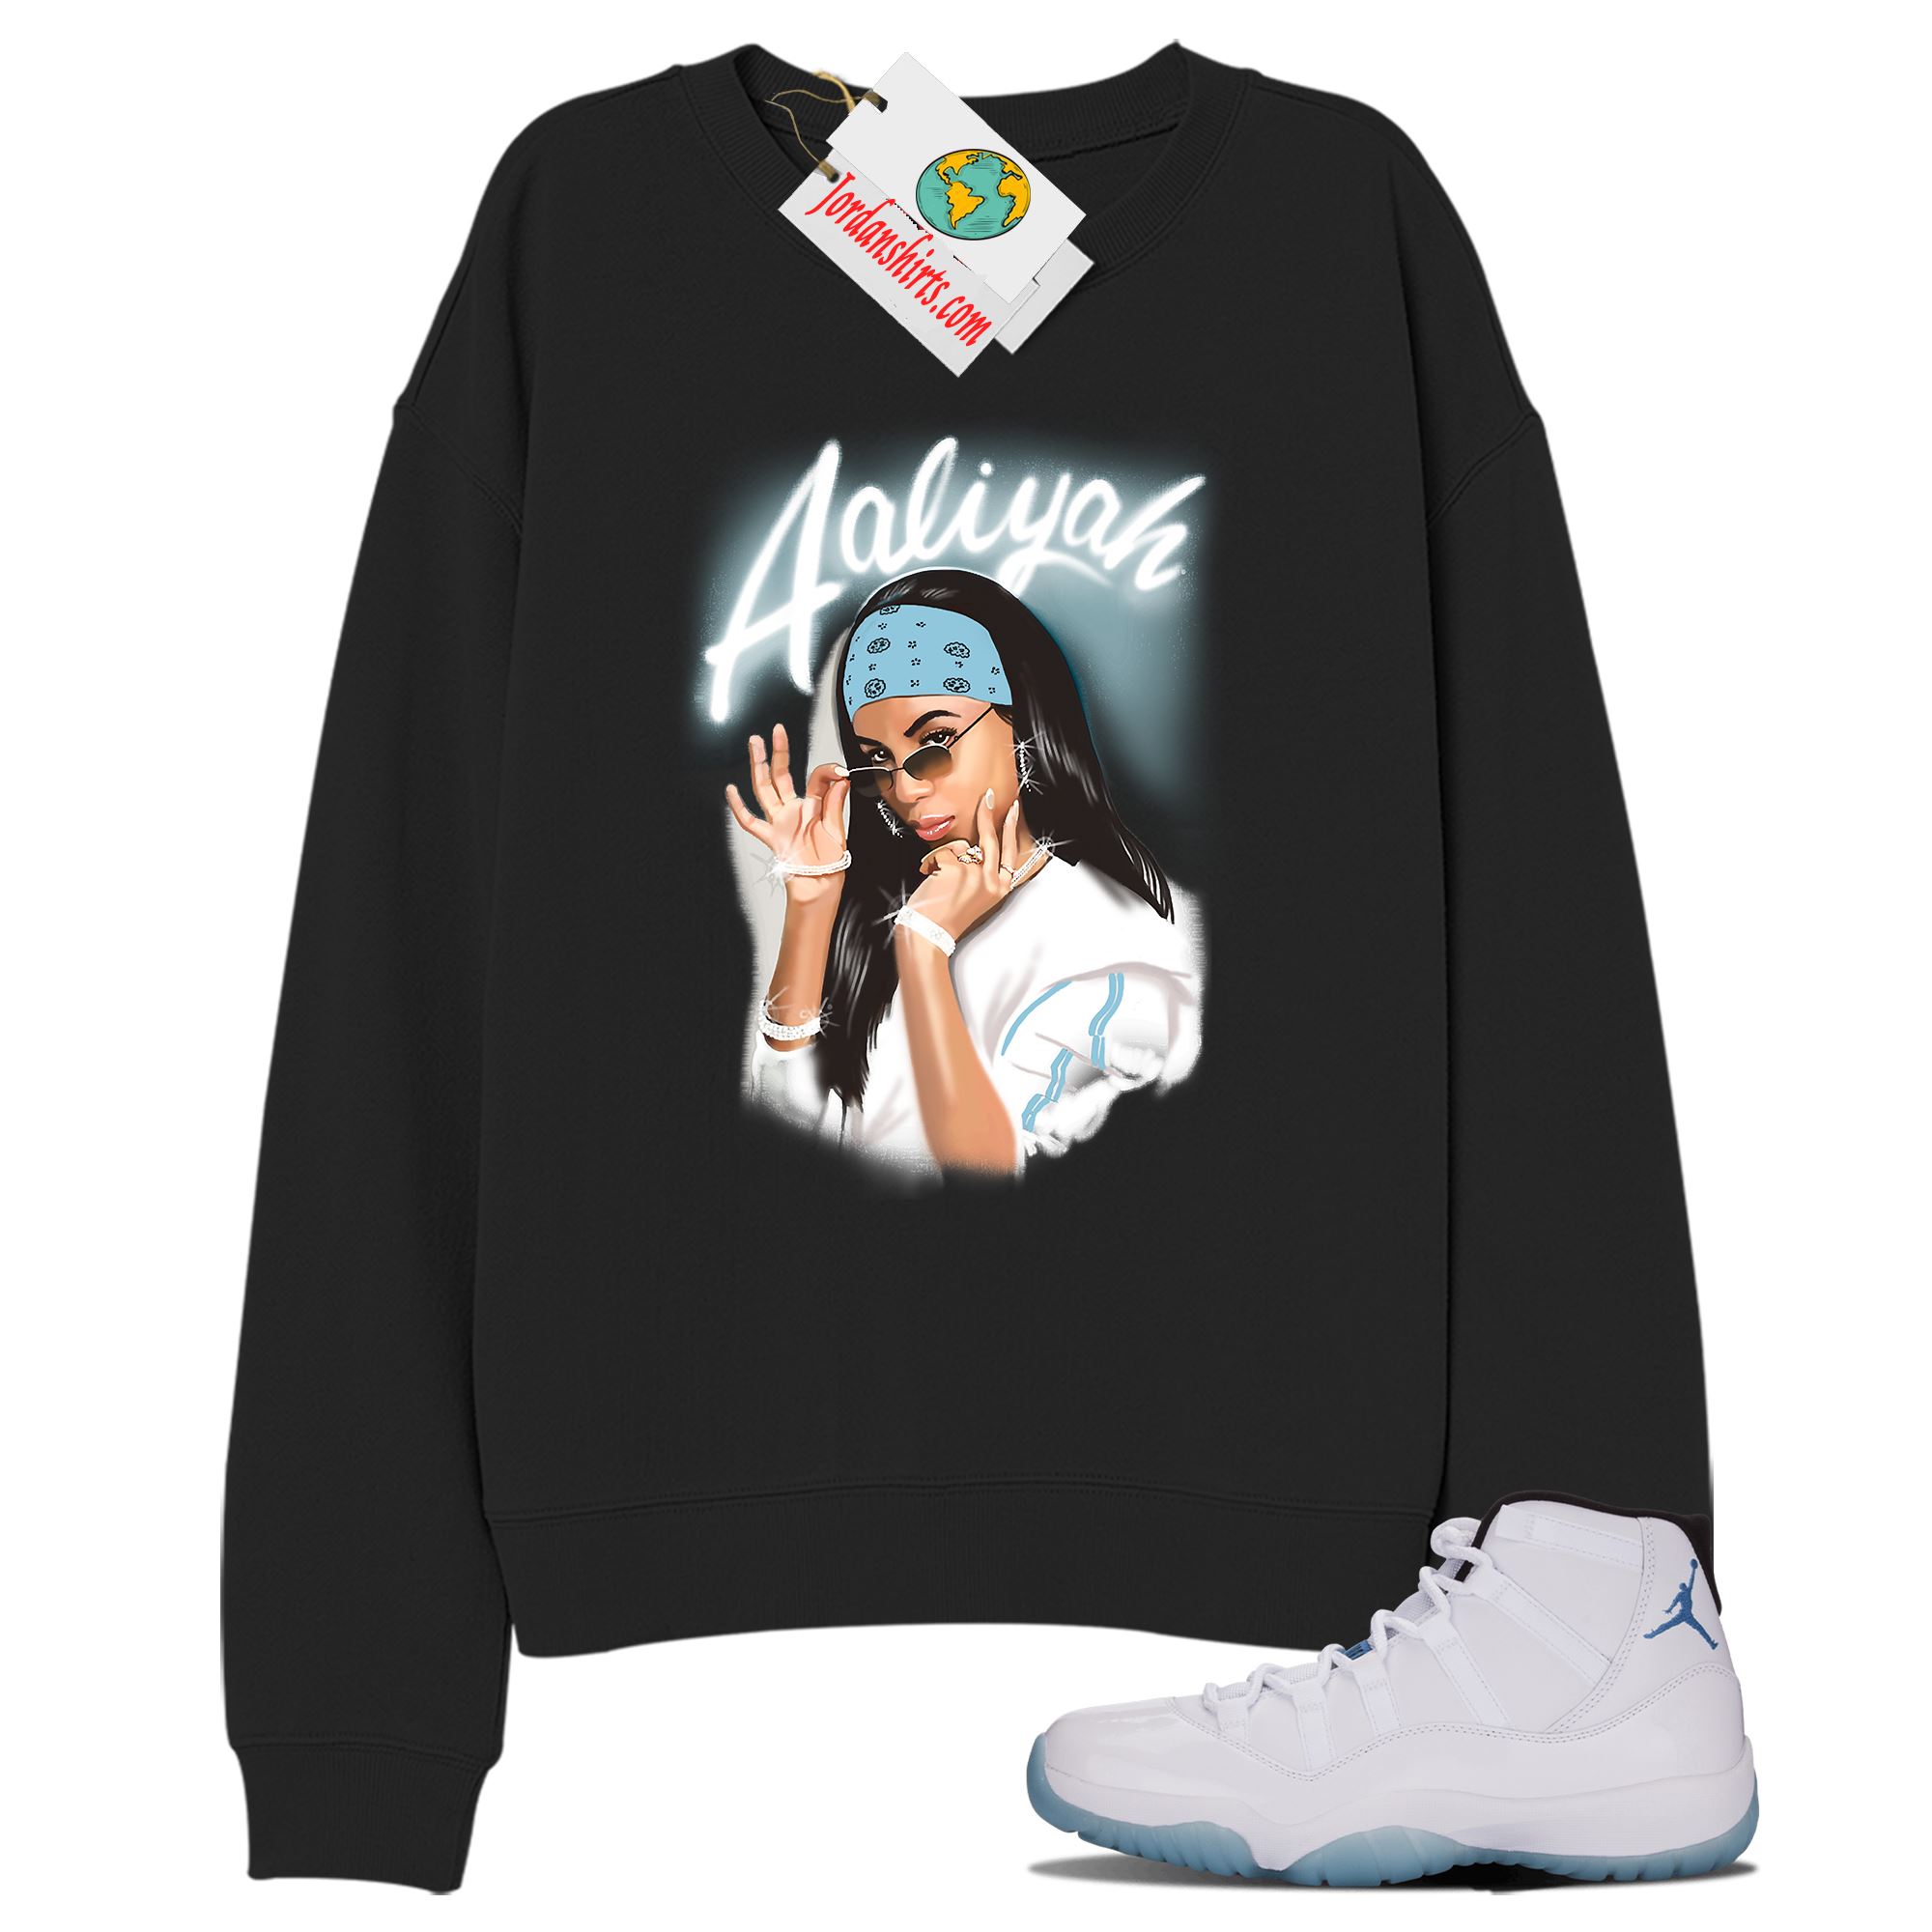 Jordan 11 Sweatshirt, Aaliyah Airbrushh Black Sweatshirt Air Jordan 11 Legend Blue 11s Size Up To 5xl